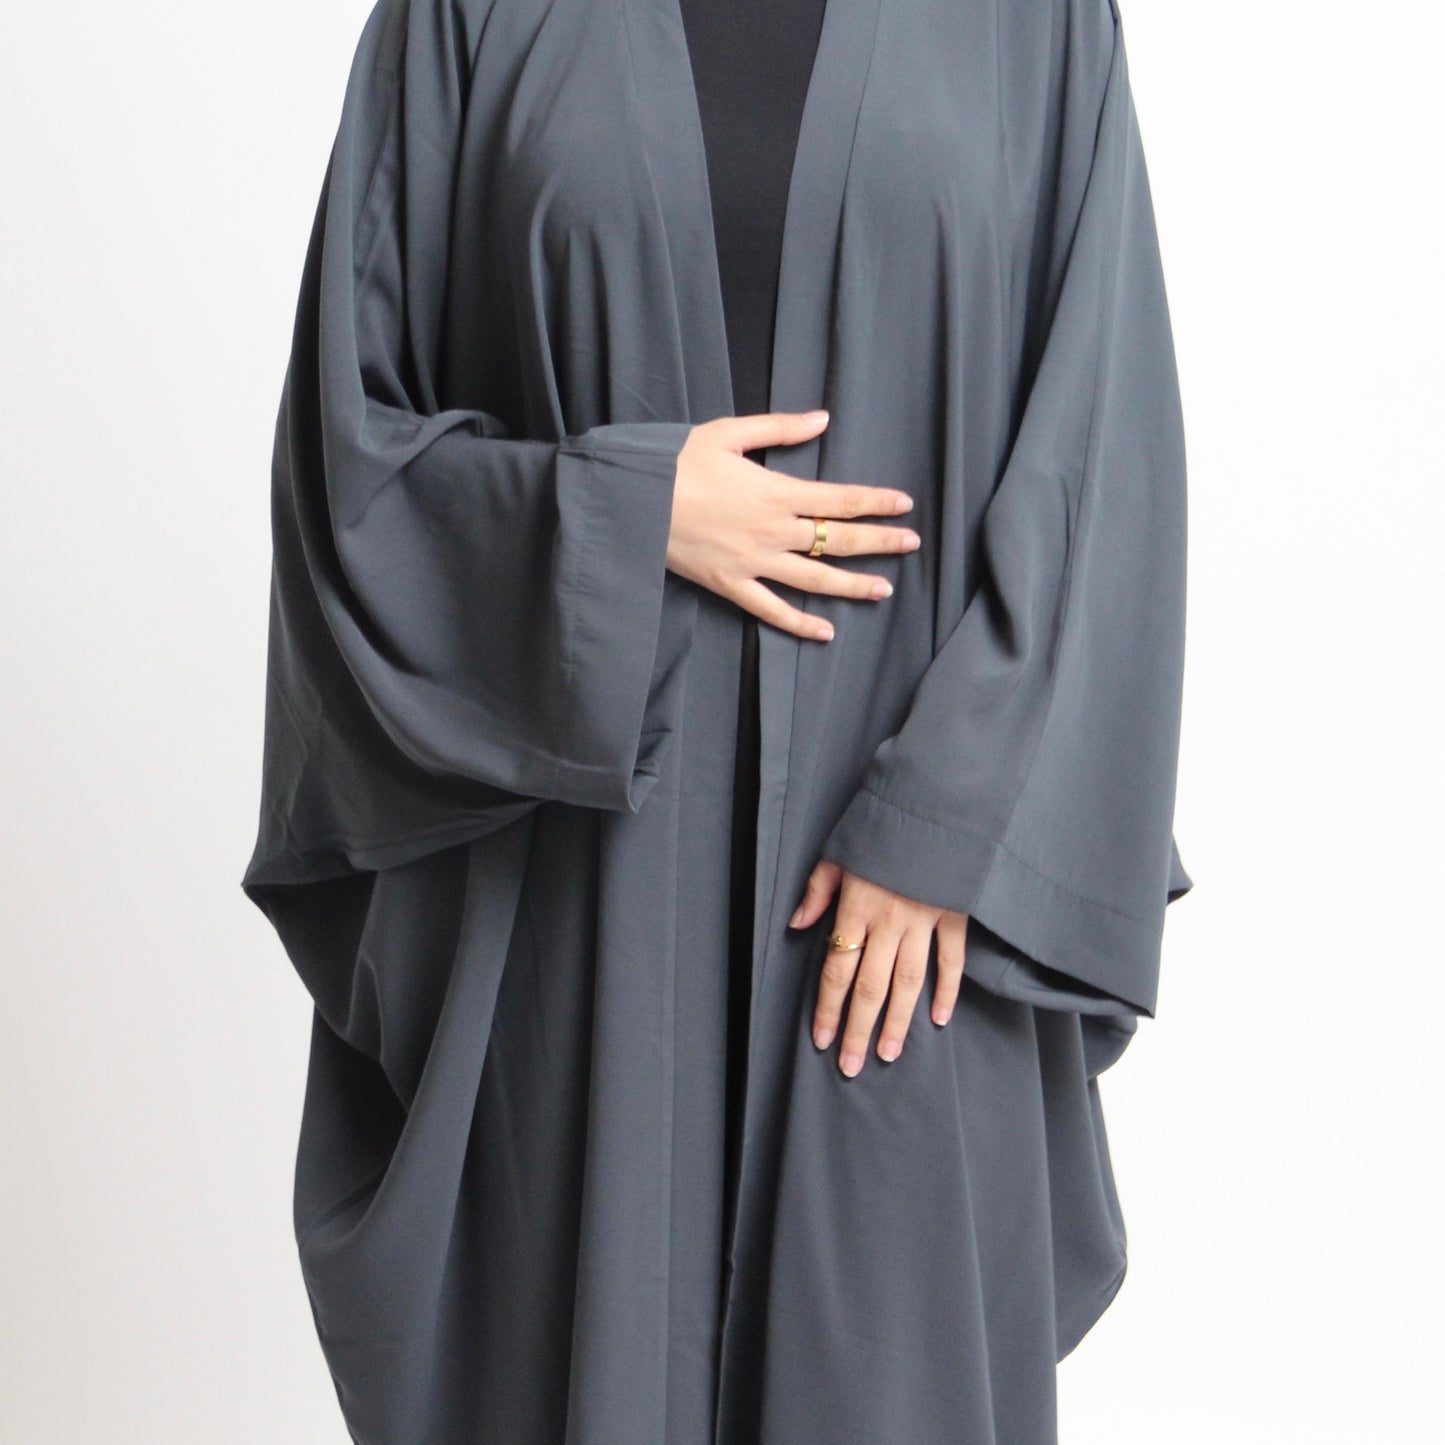 Nahla’s Open Cloak Abaya Teal